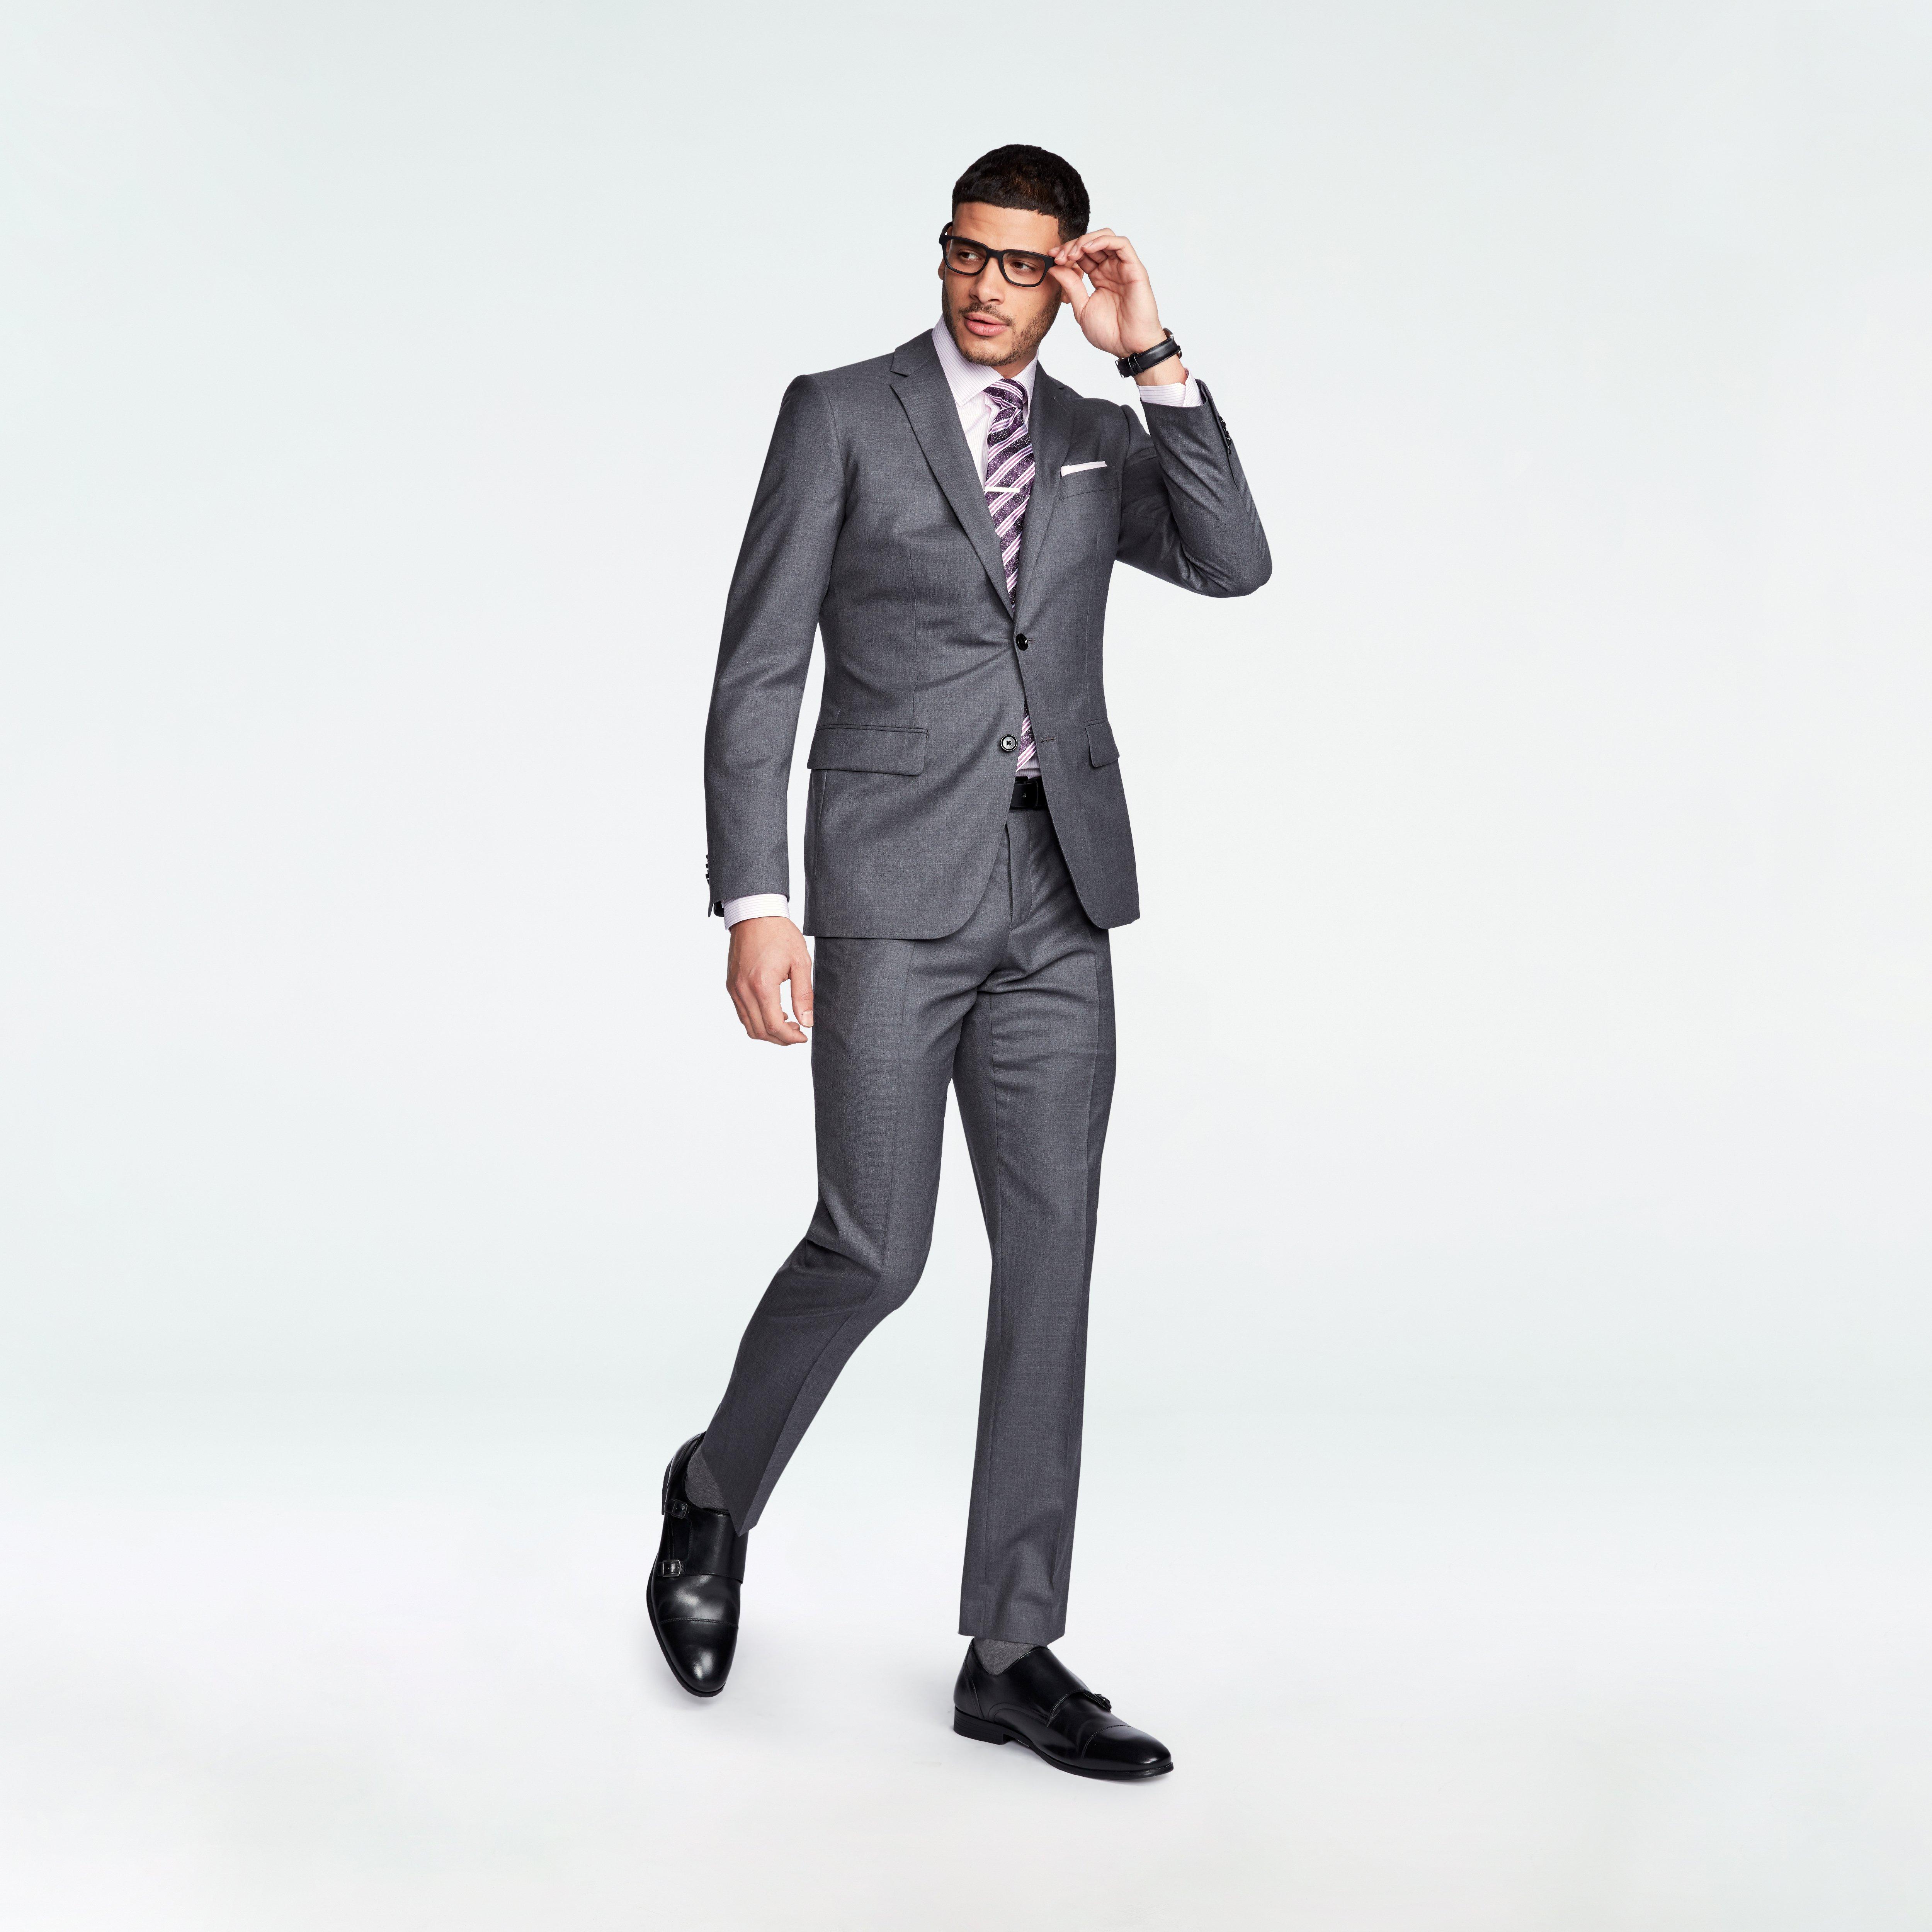 Men's Light Grey Suit | Suits for Weddings & Events | Light grey suits, Grey  suit jacket, Gray suit